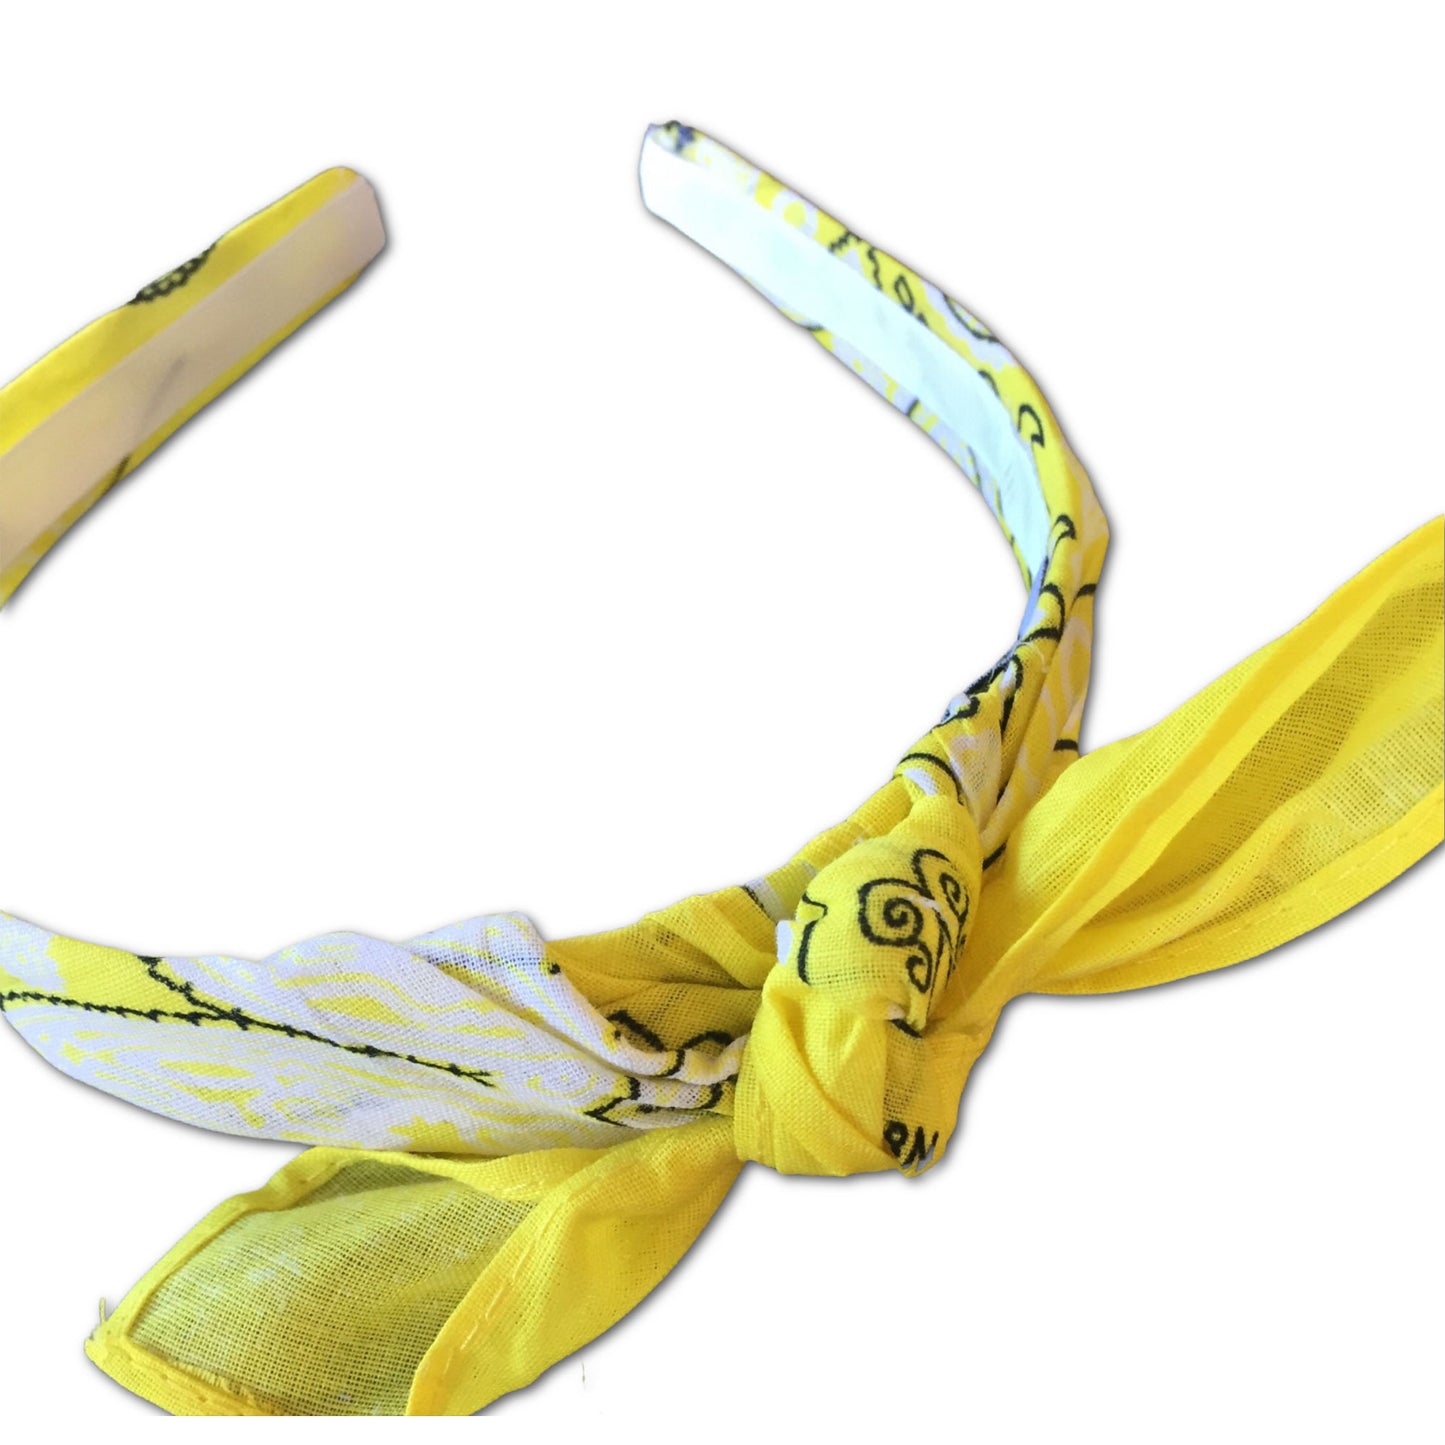 NEON Paisley Bandana Knot Tied Headband (Multiple Colors)